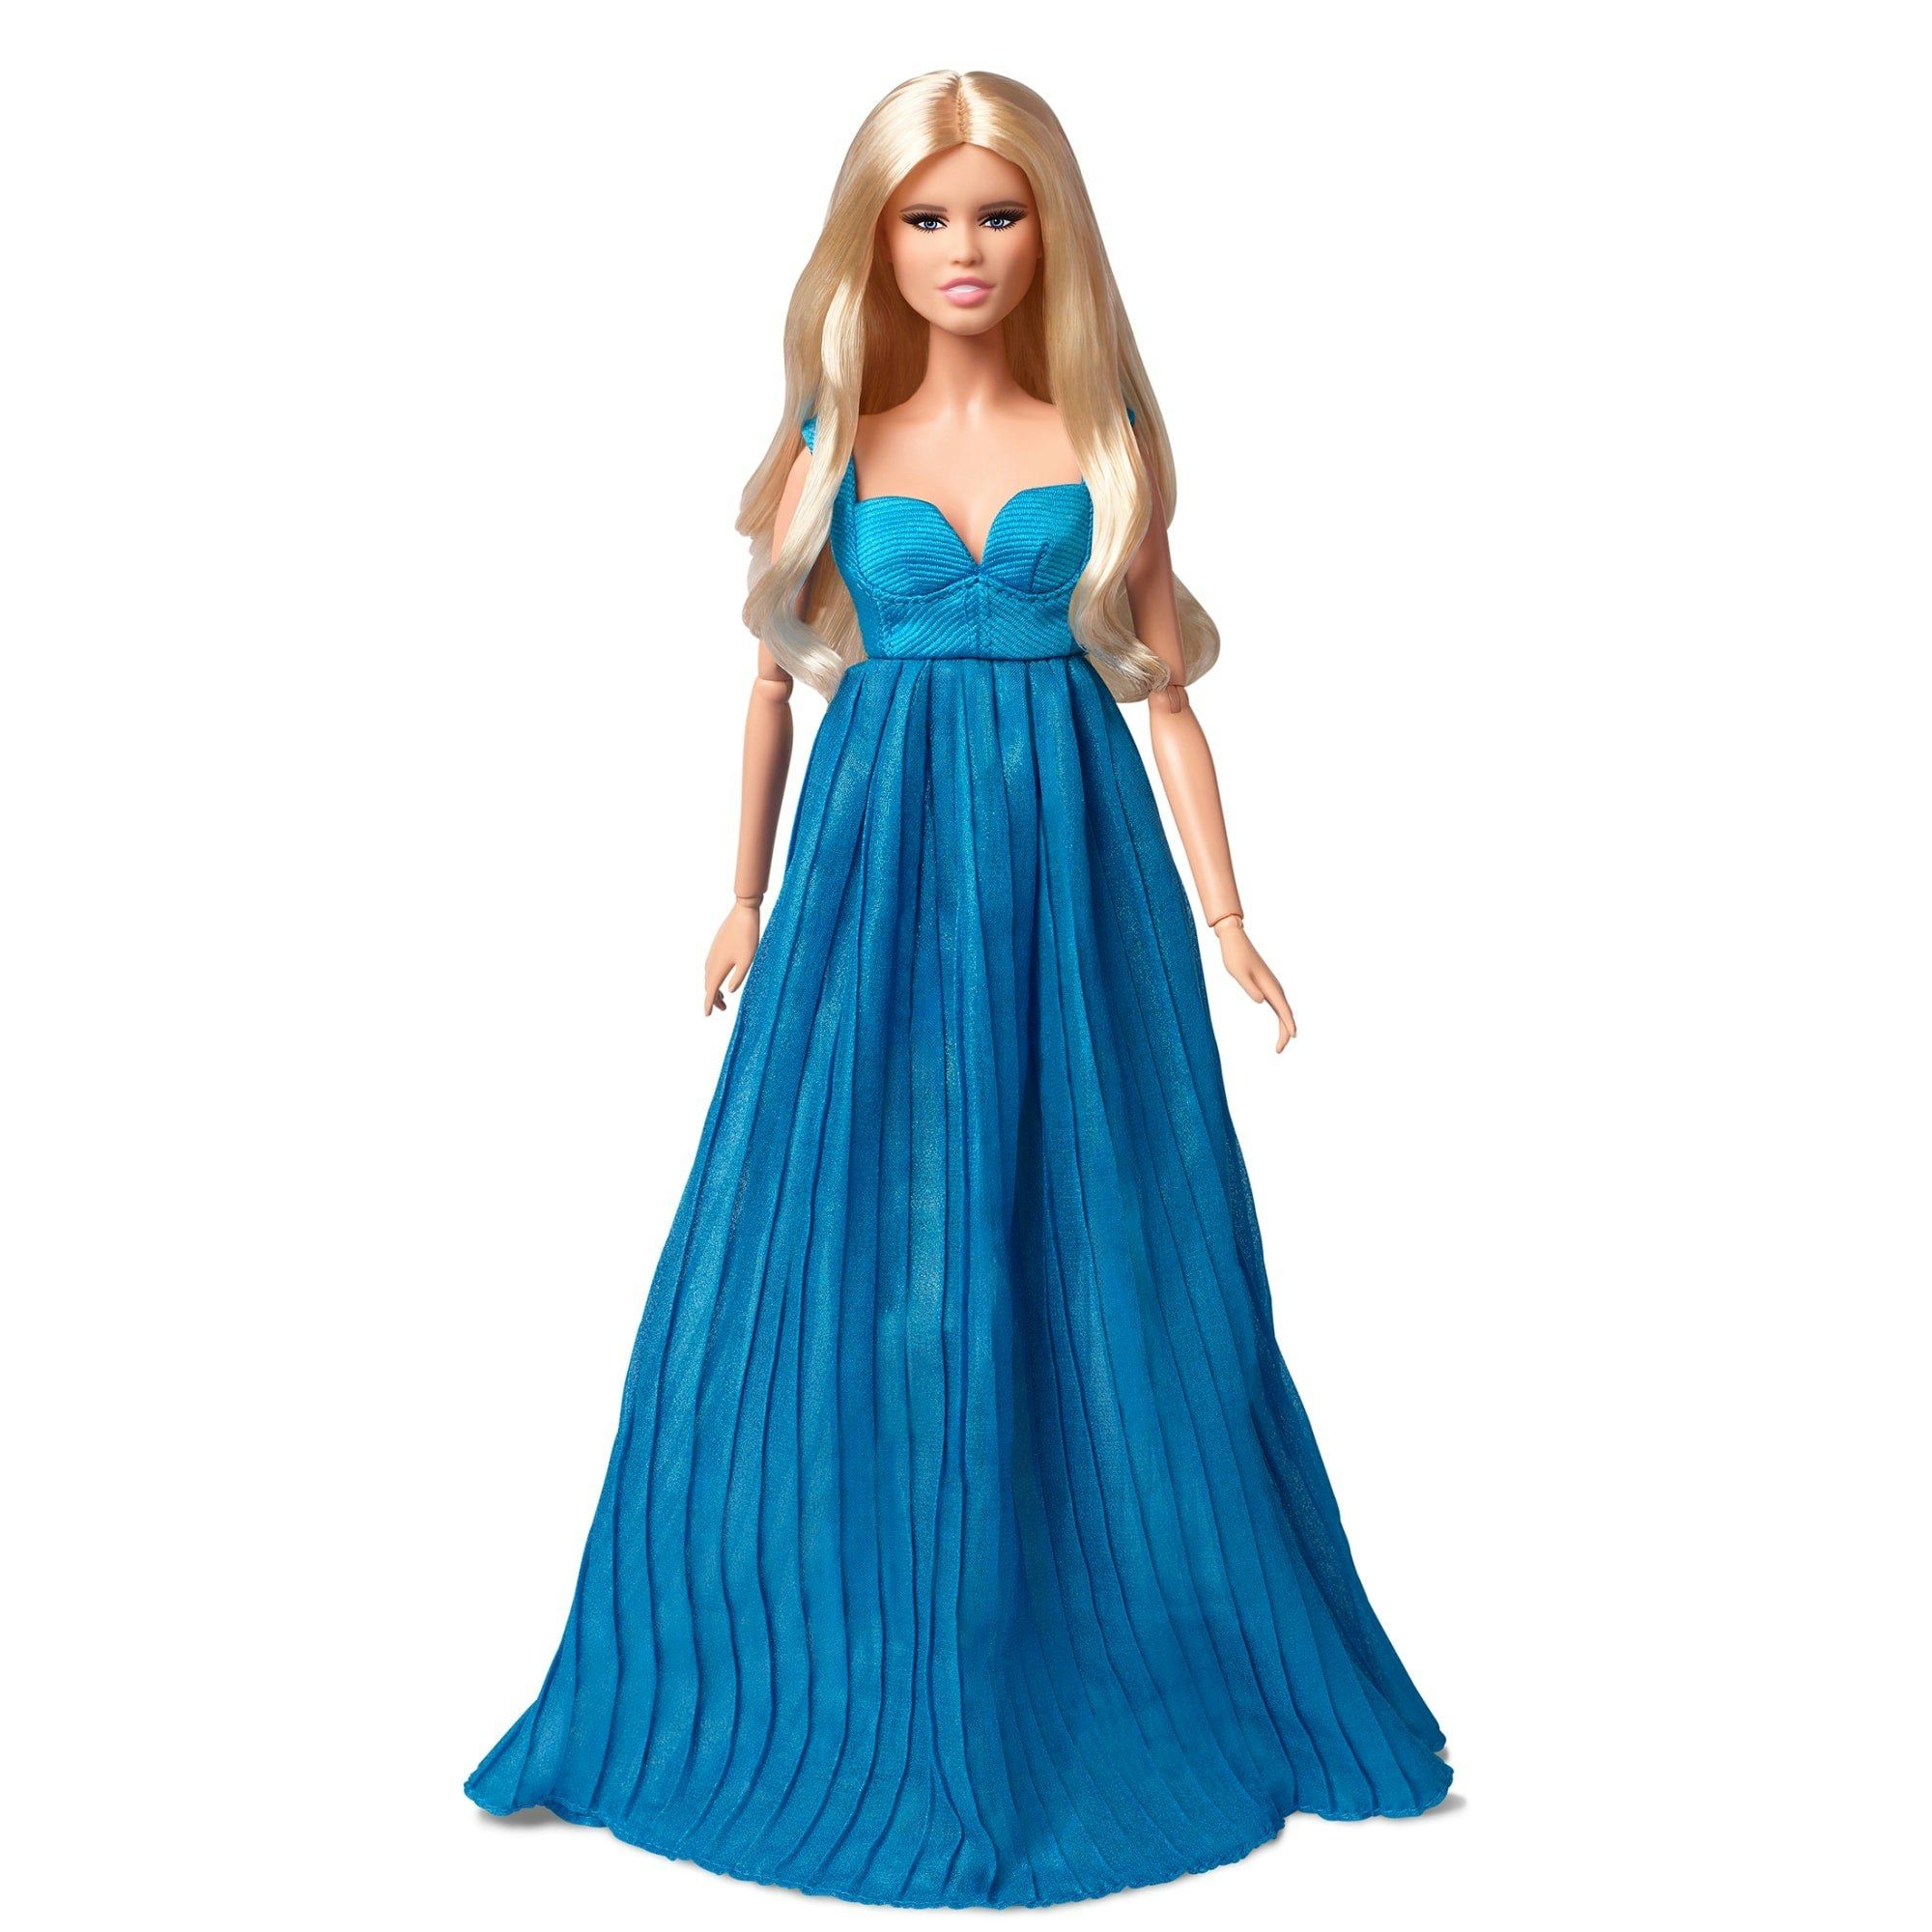 Shop White Gown Barbie Doll online | Lazada.com.ph